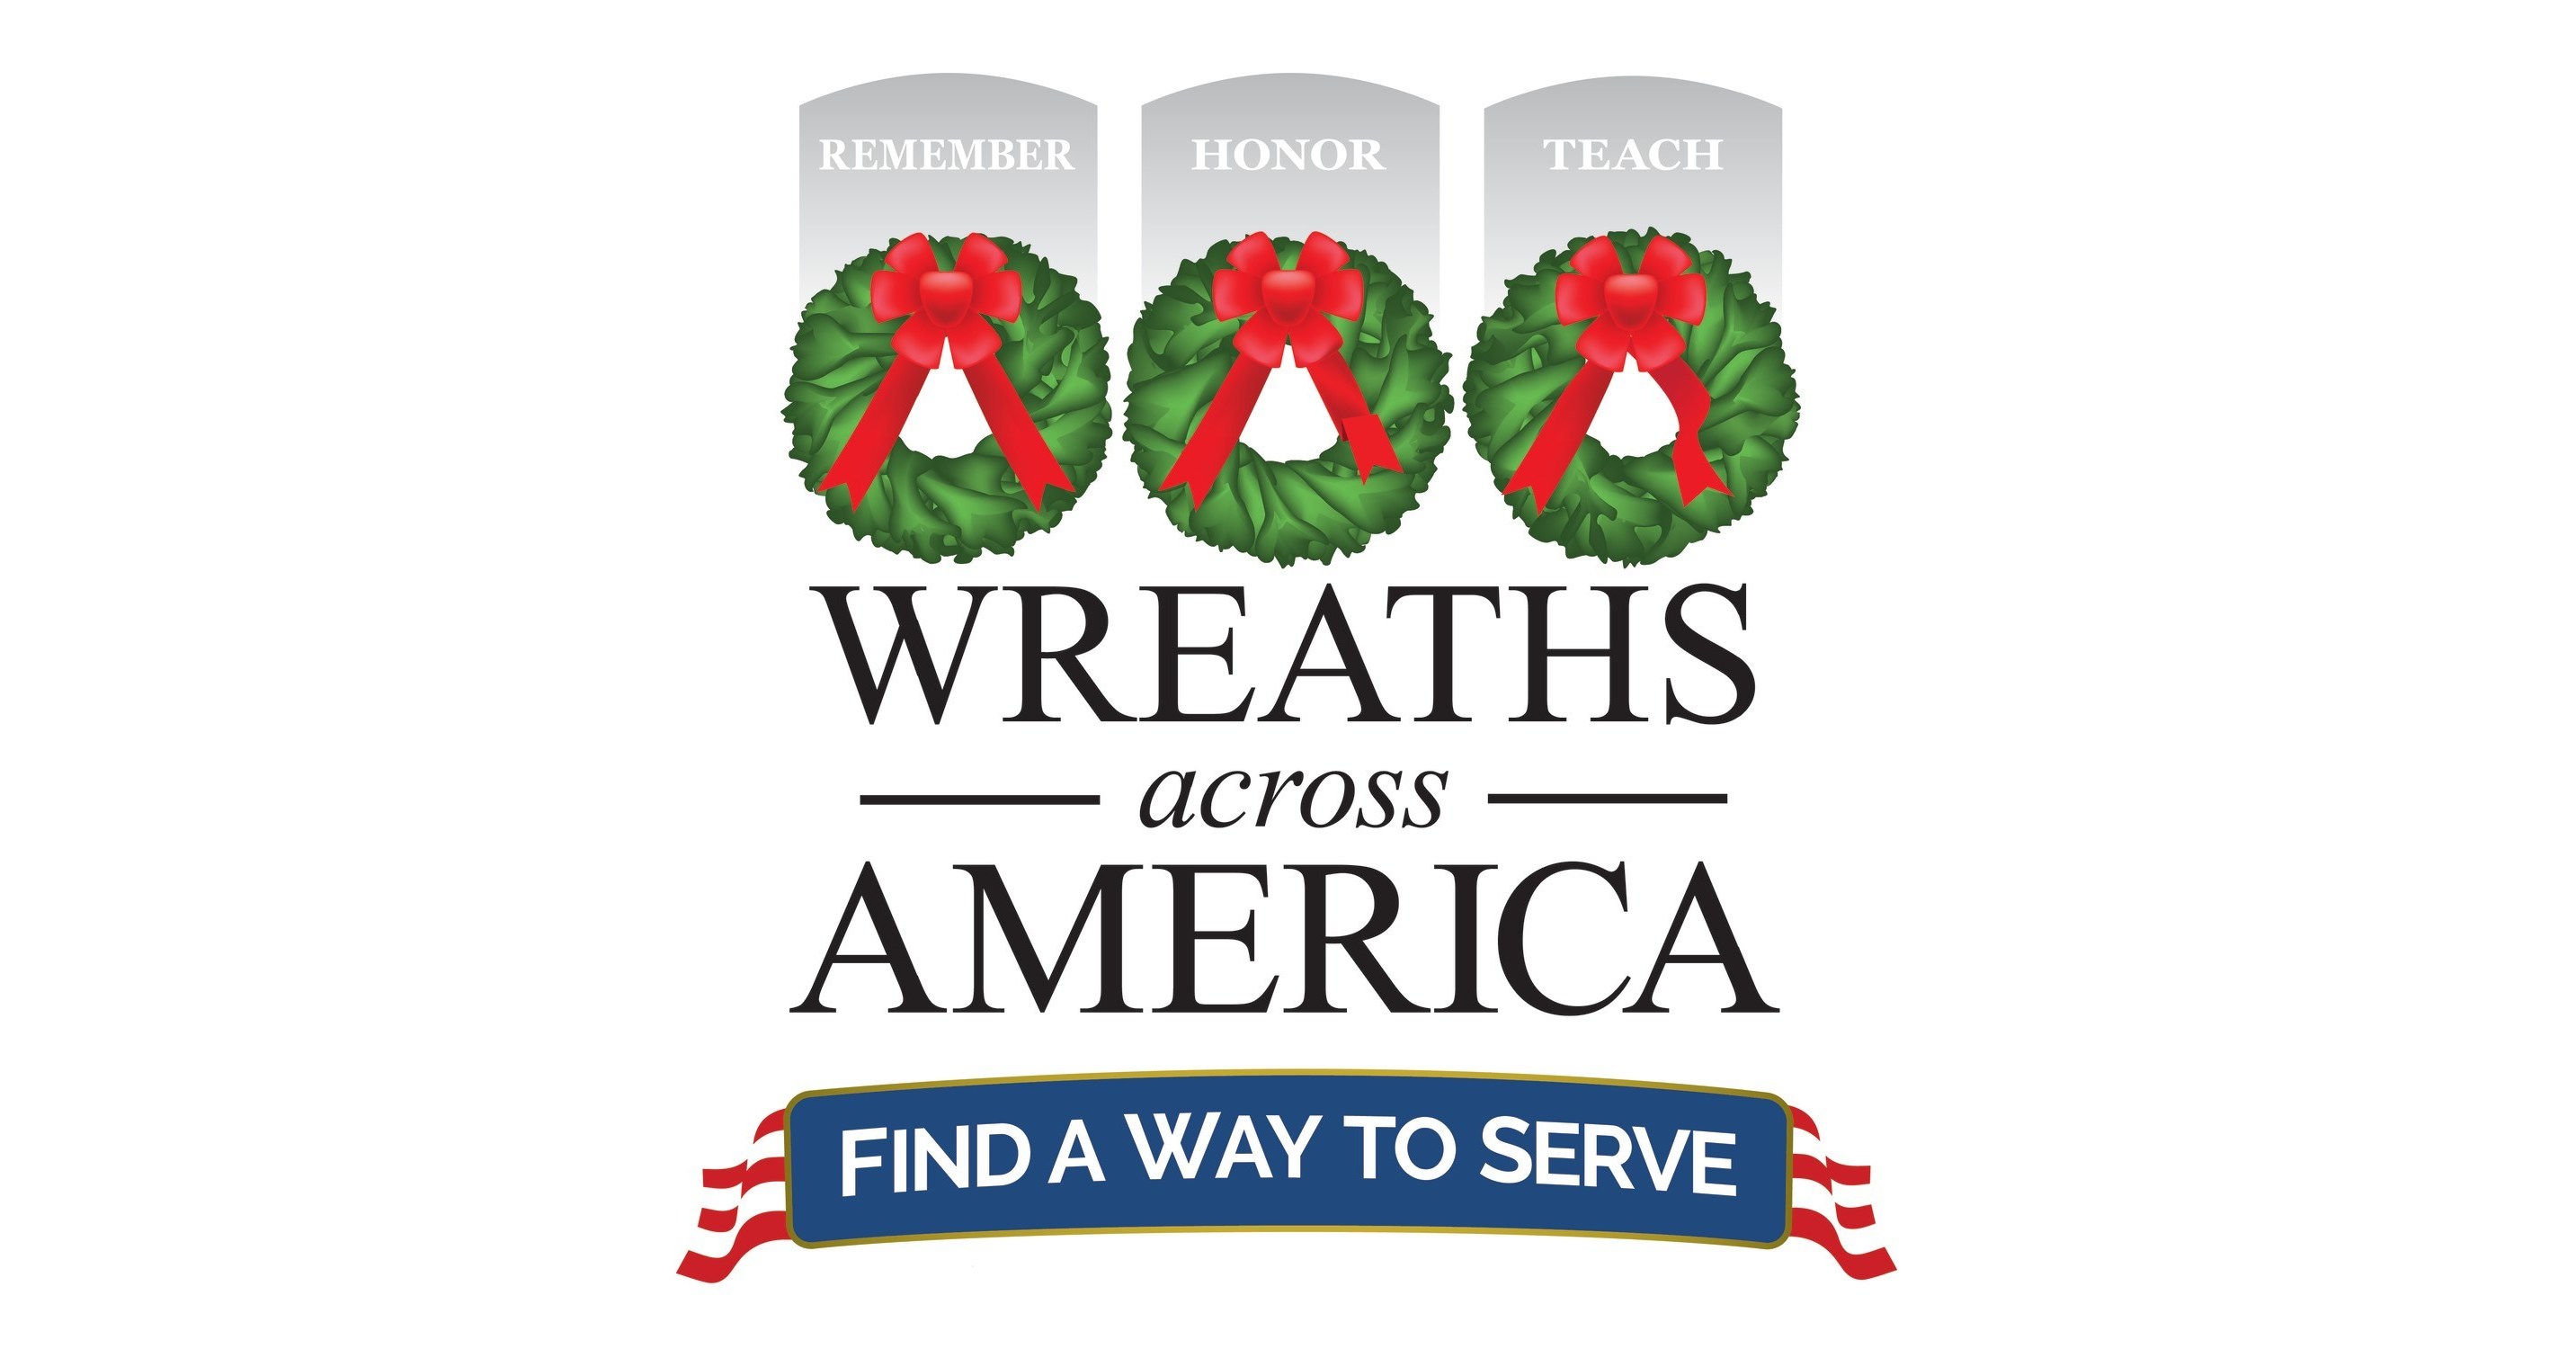 Wreaths Across America Form 990